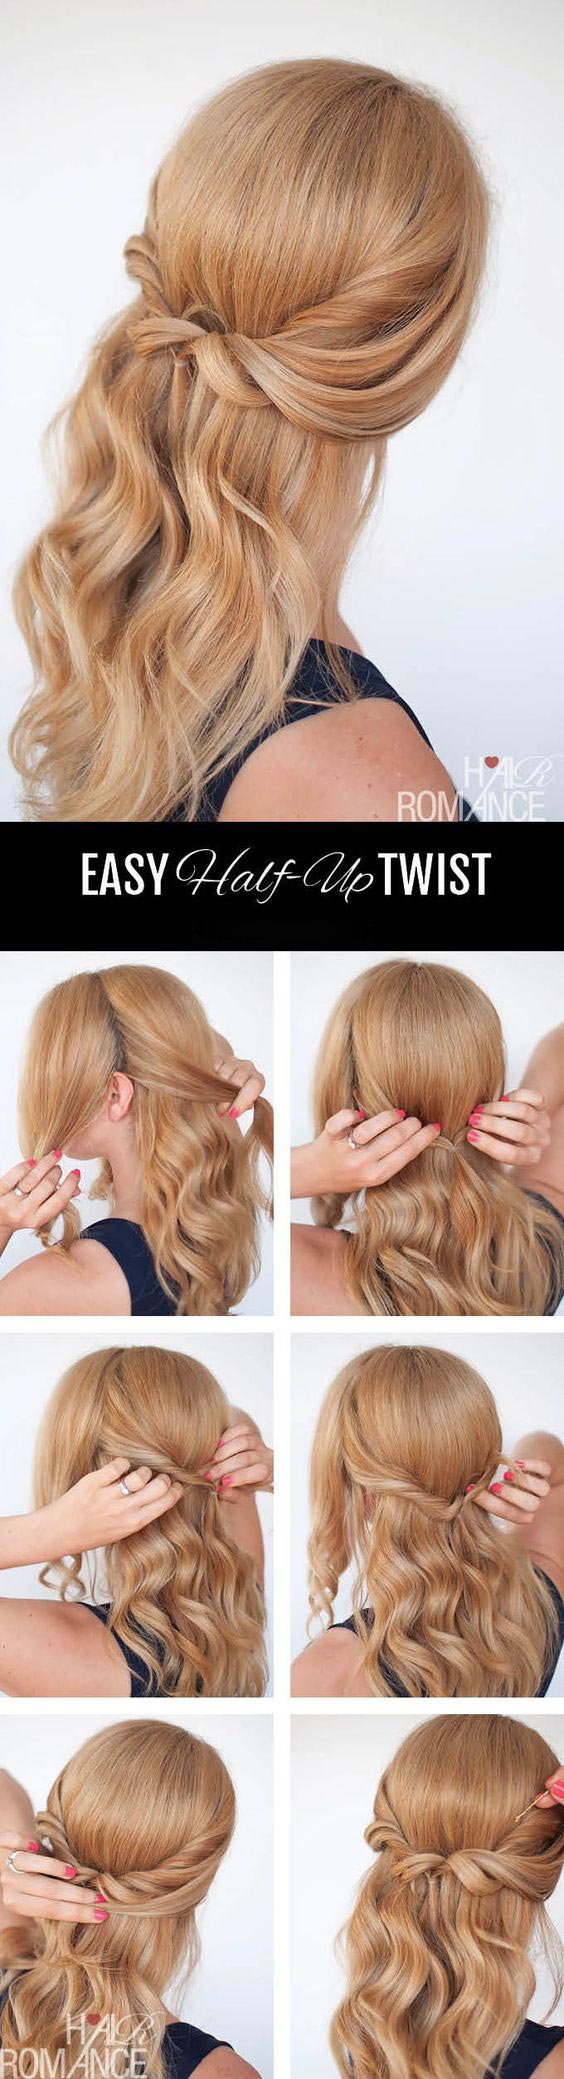 Easy Half Up Twist Last Minute Hairstyle